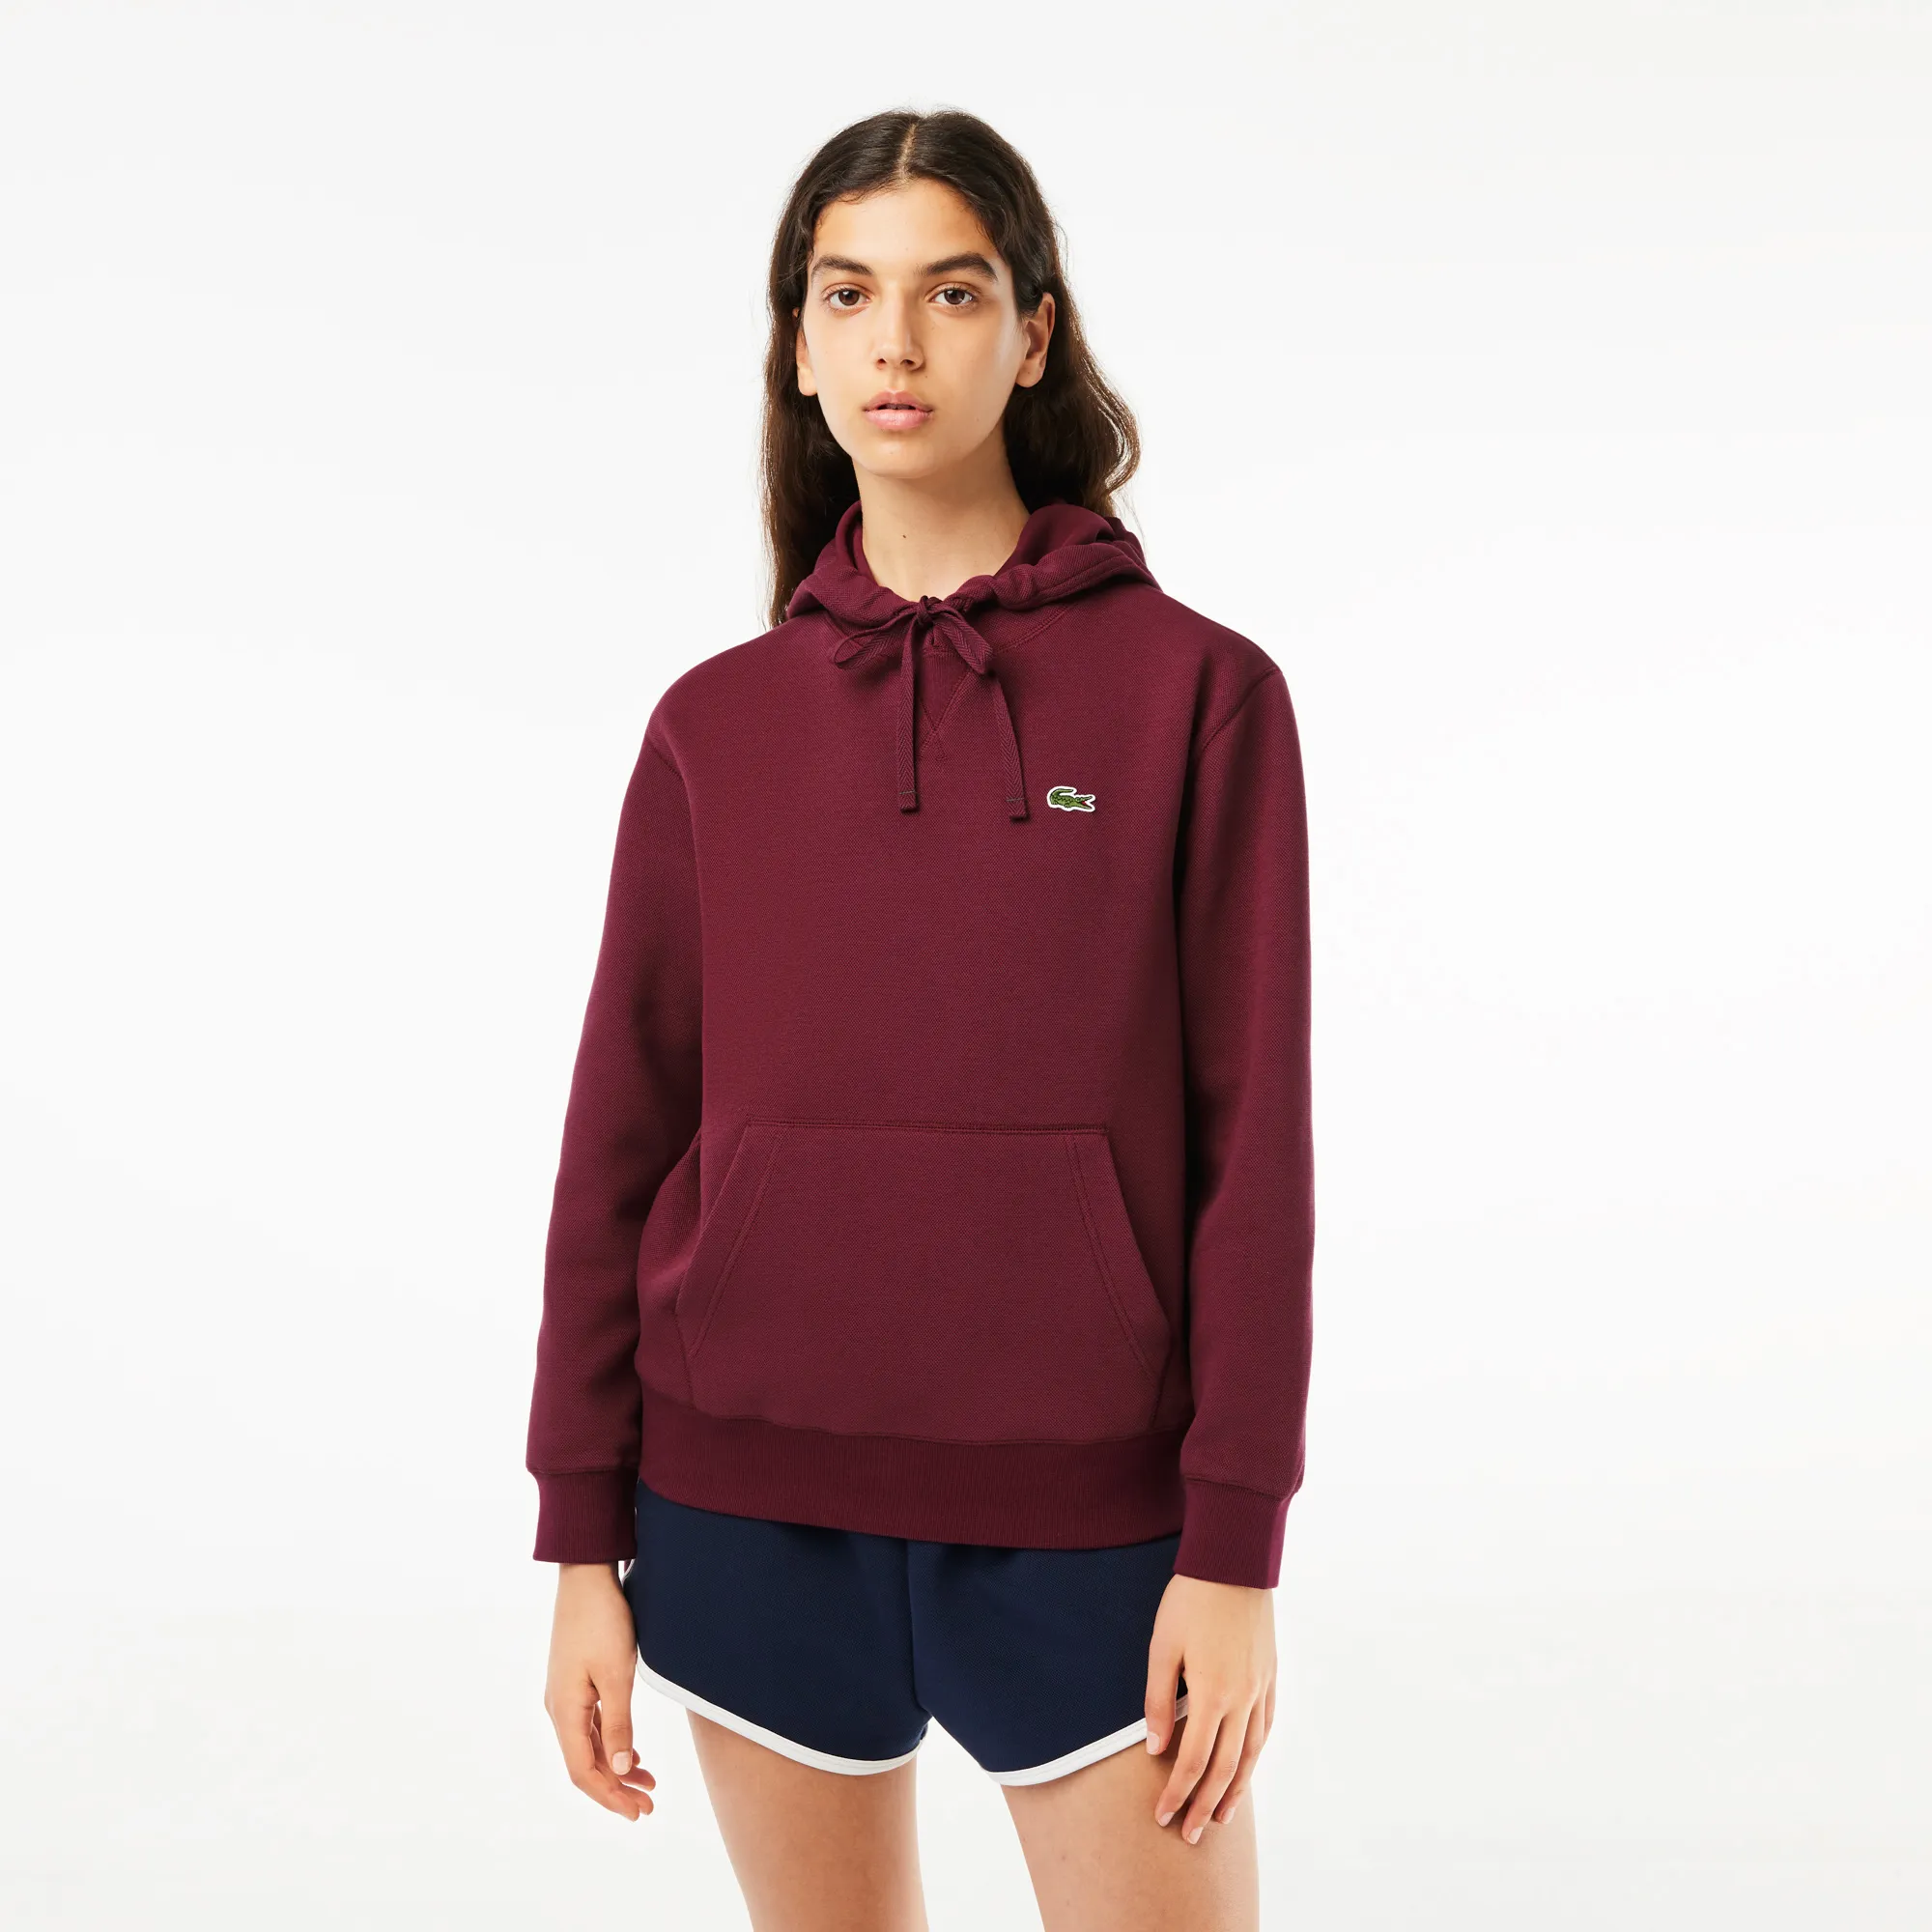 Cotton-blend hoodie